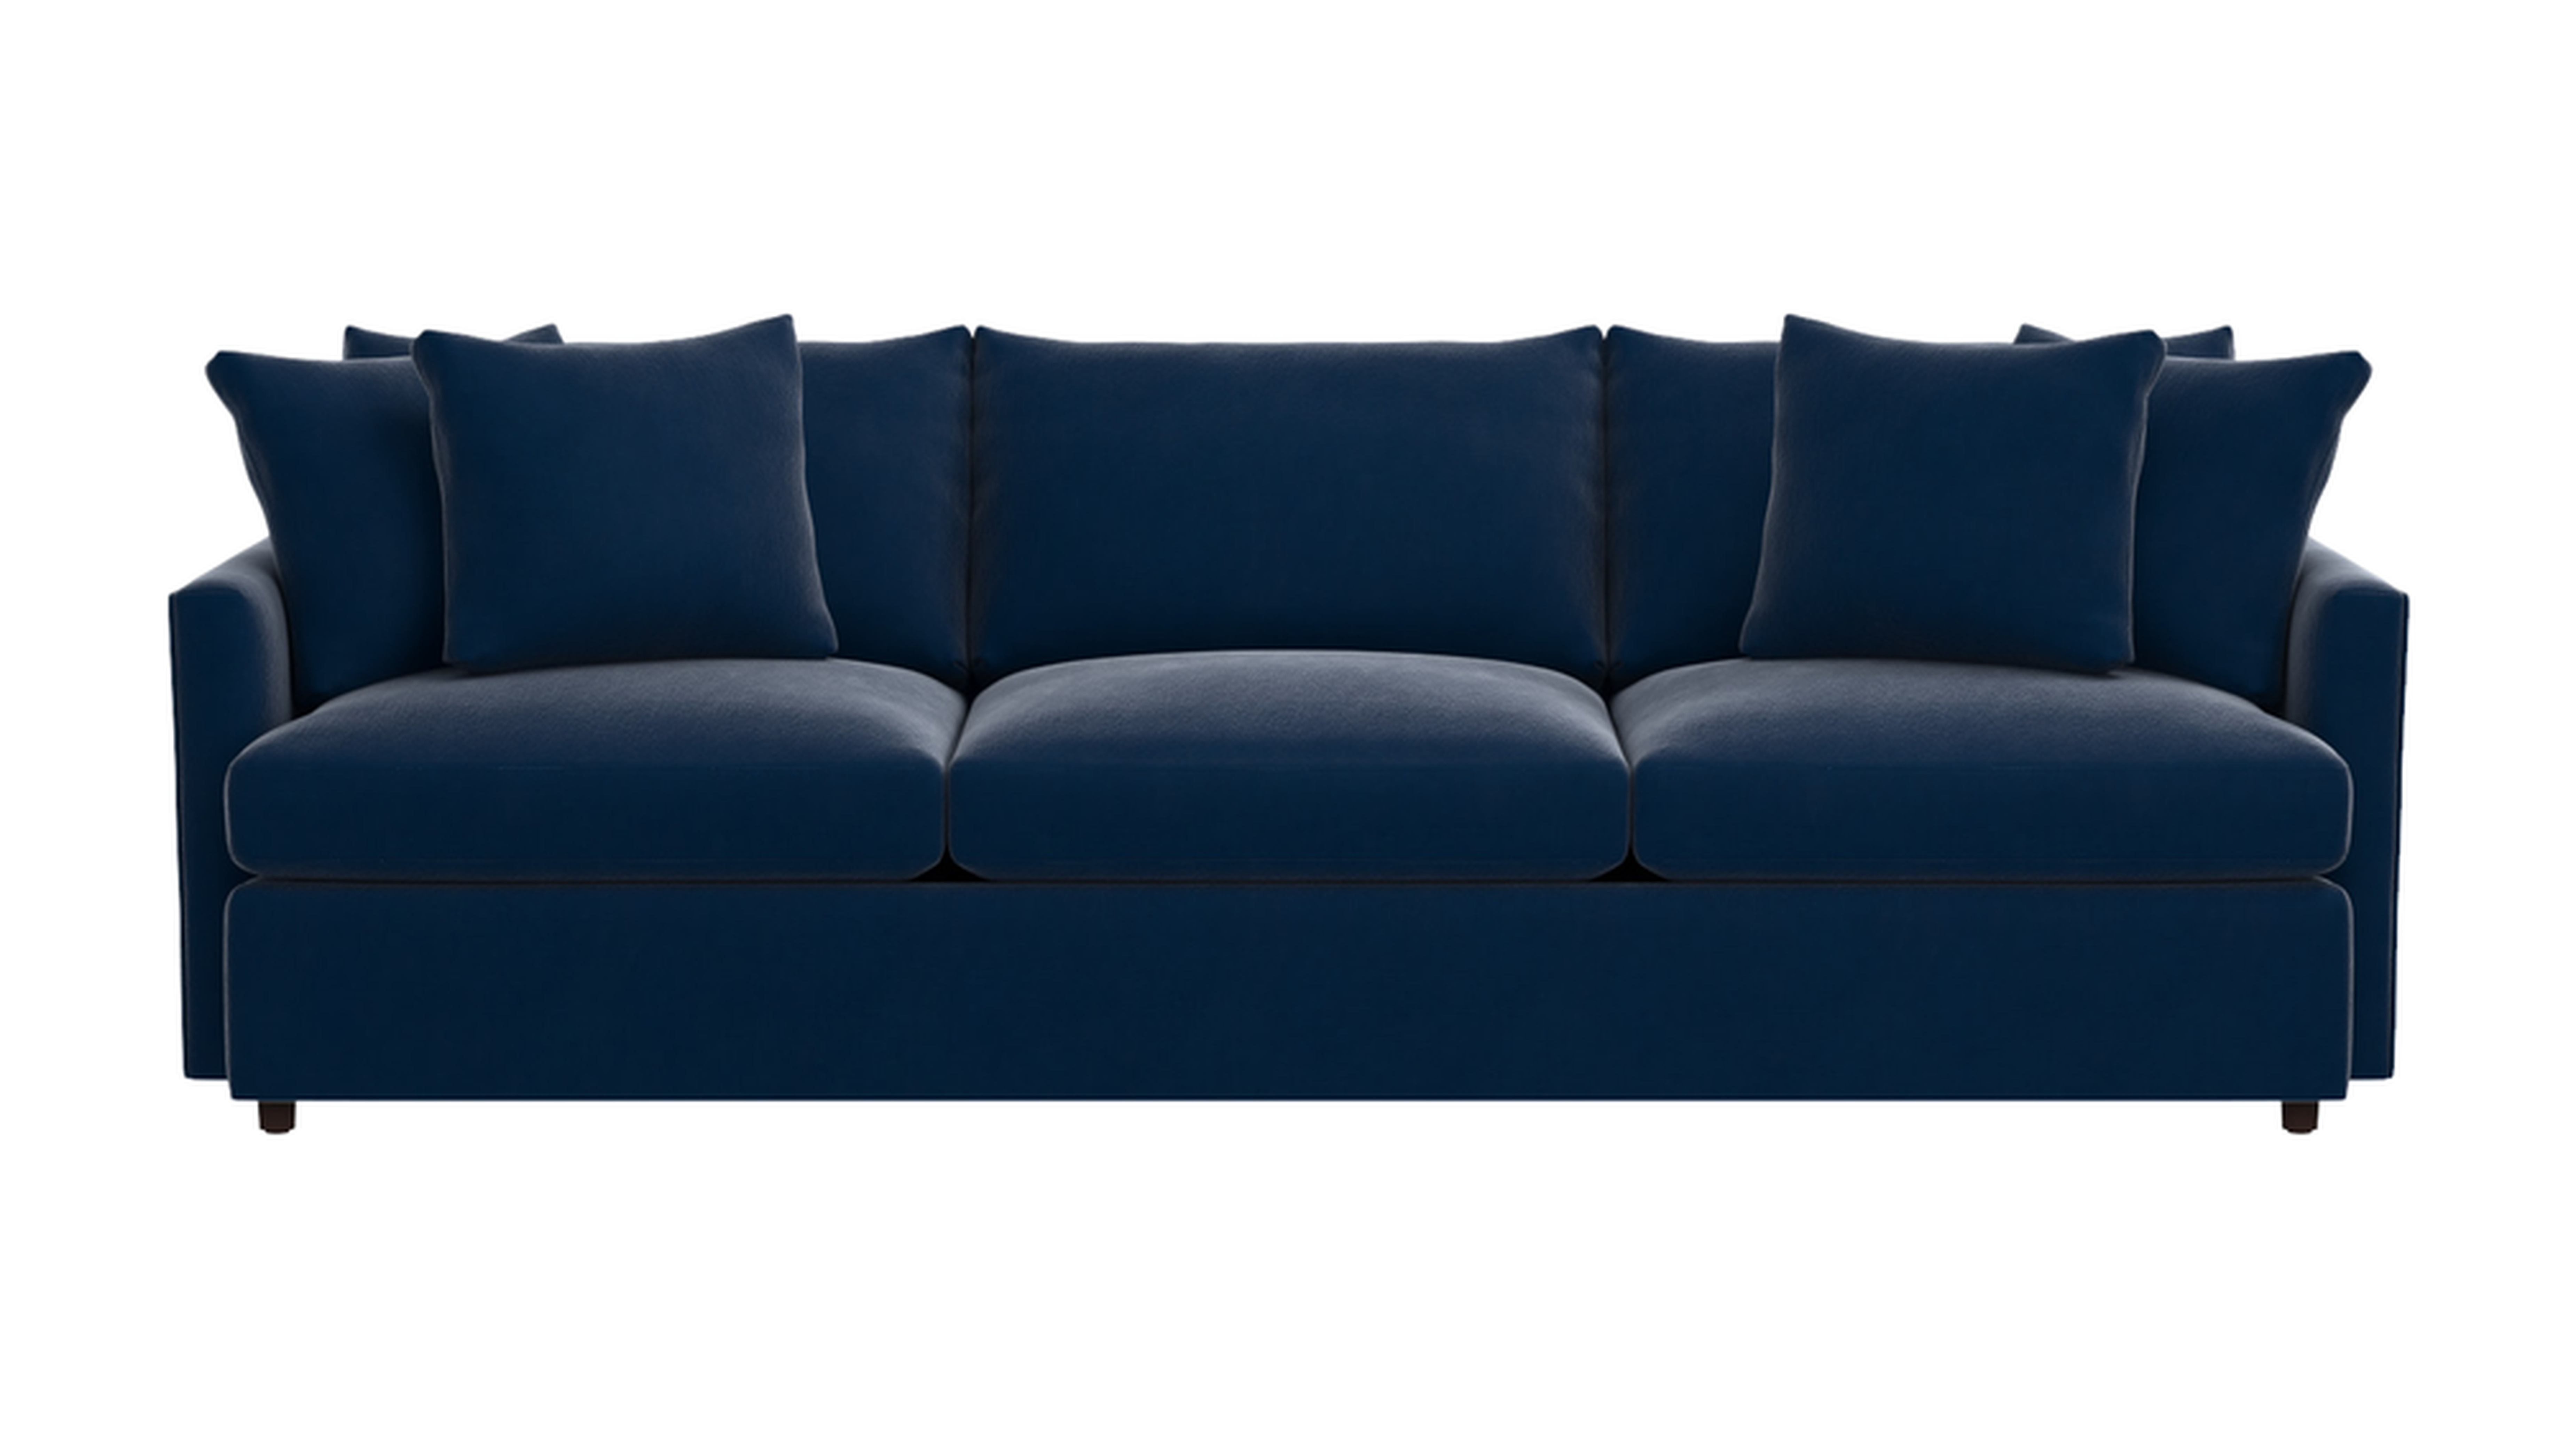 Lounge II Petite 3-Seat 105" Grande Sofa - Fabric: View, Navy (velvet look) - Crate and Barrel